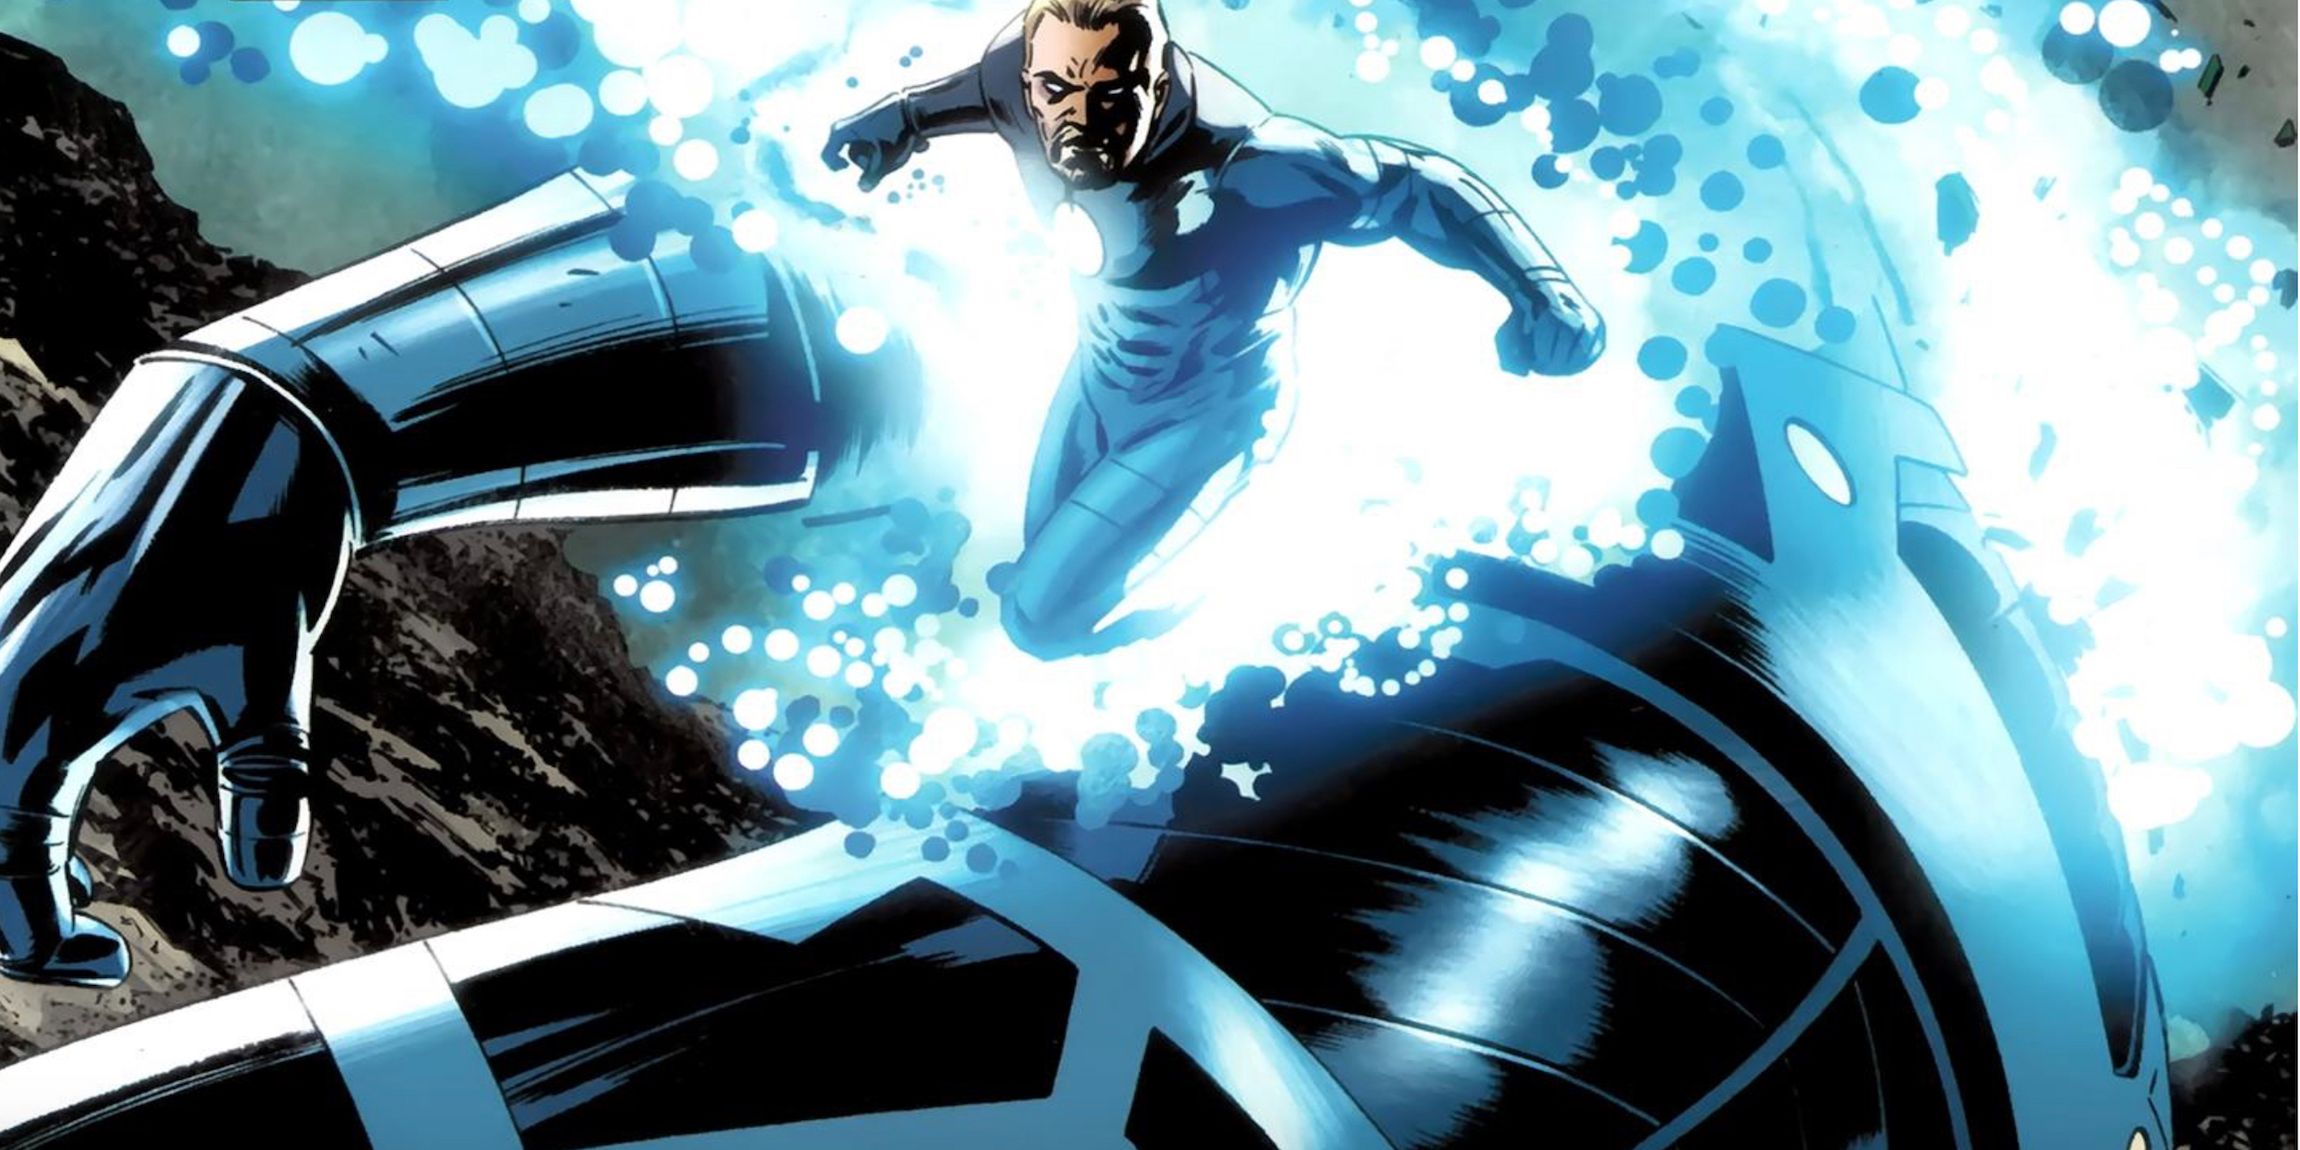 Adult Franklin Richards attacks Celestials in Marvel Comics.